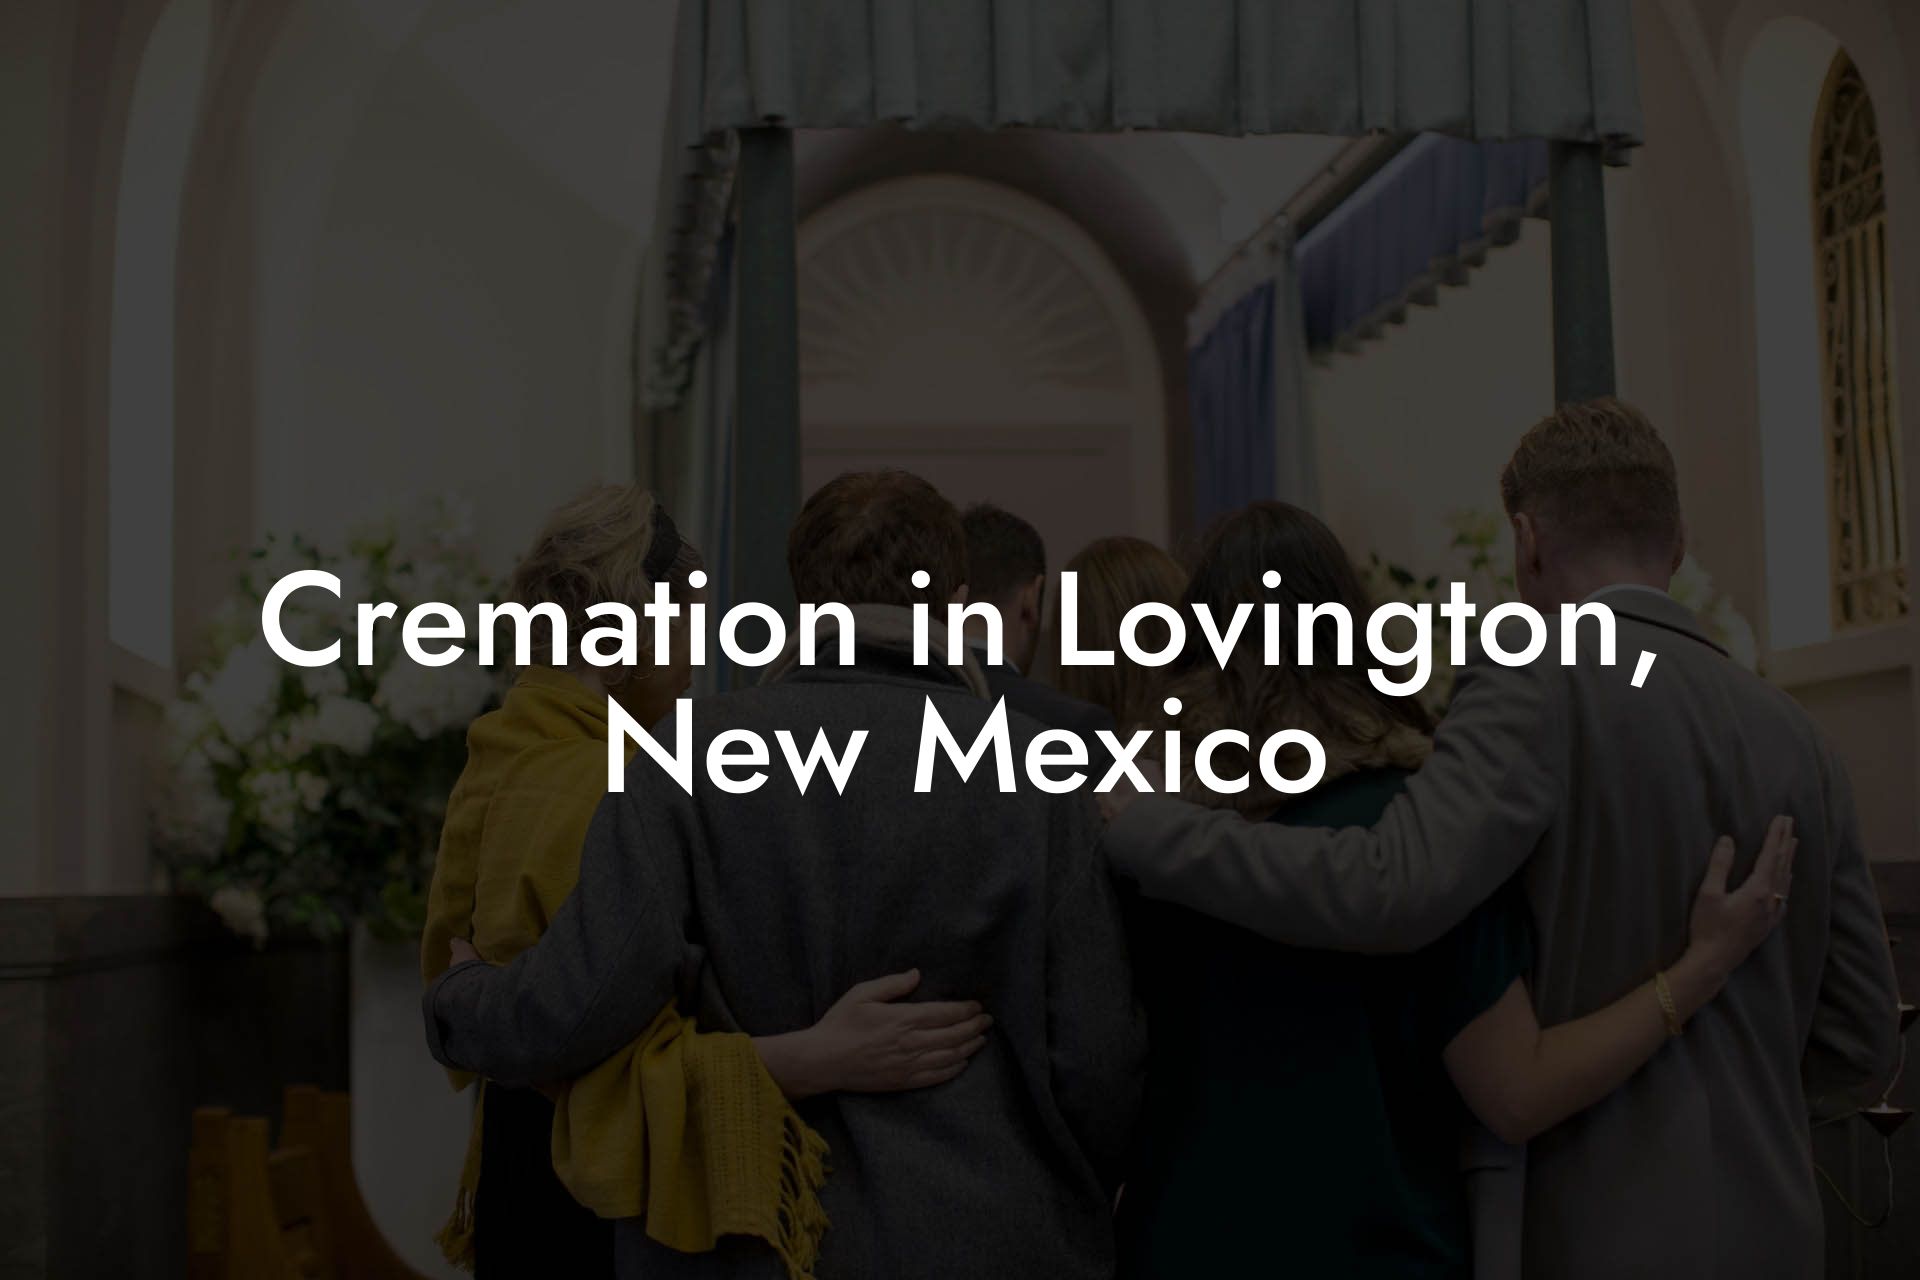 Cremation in Lovington, New Mexico